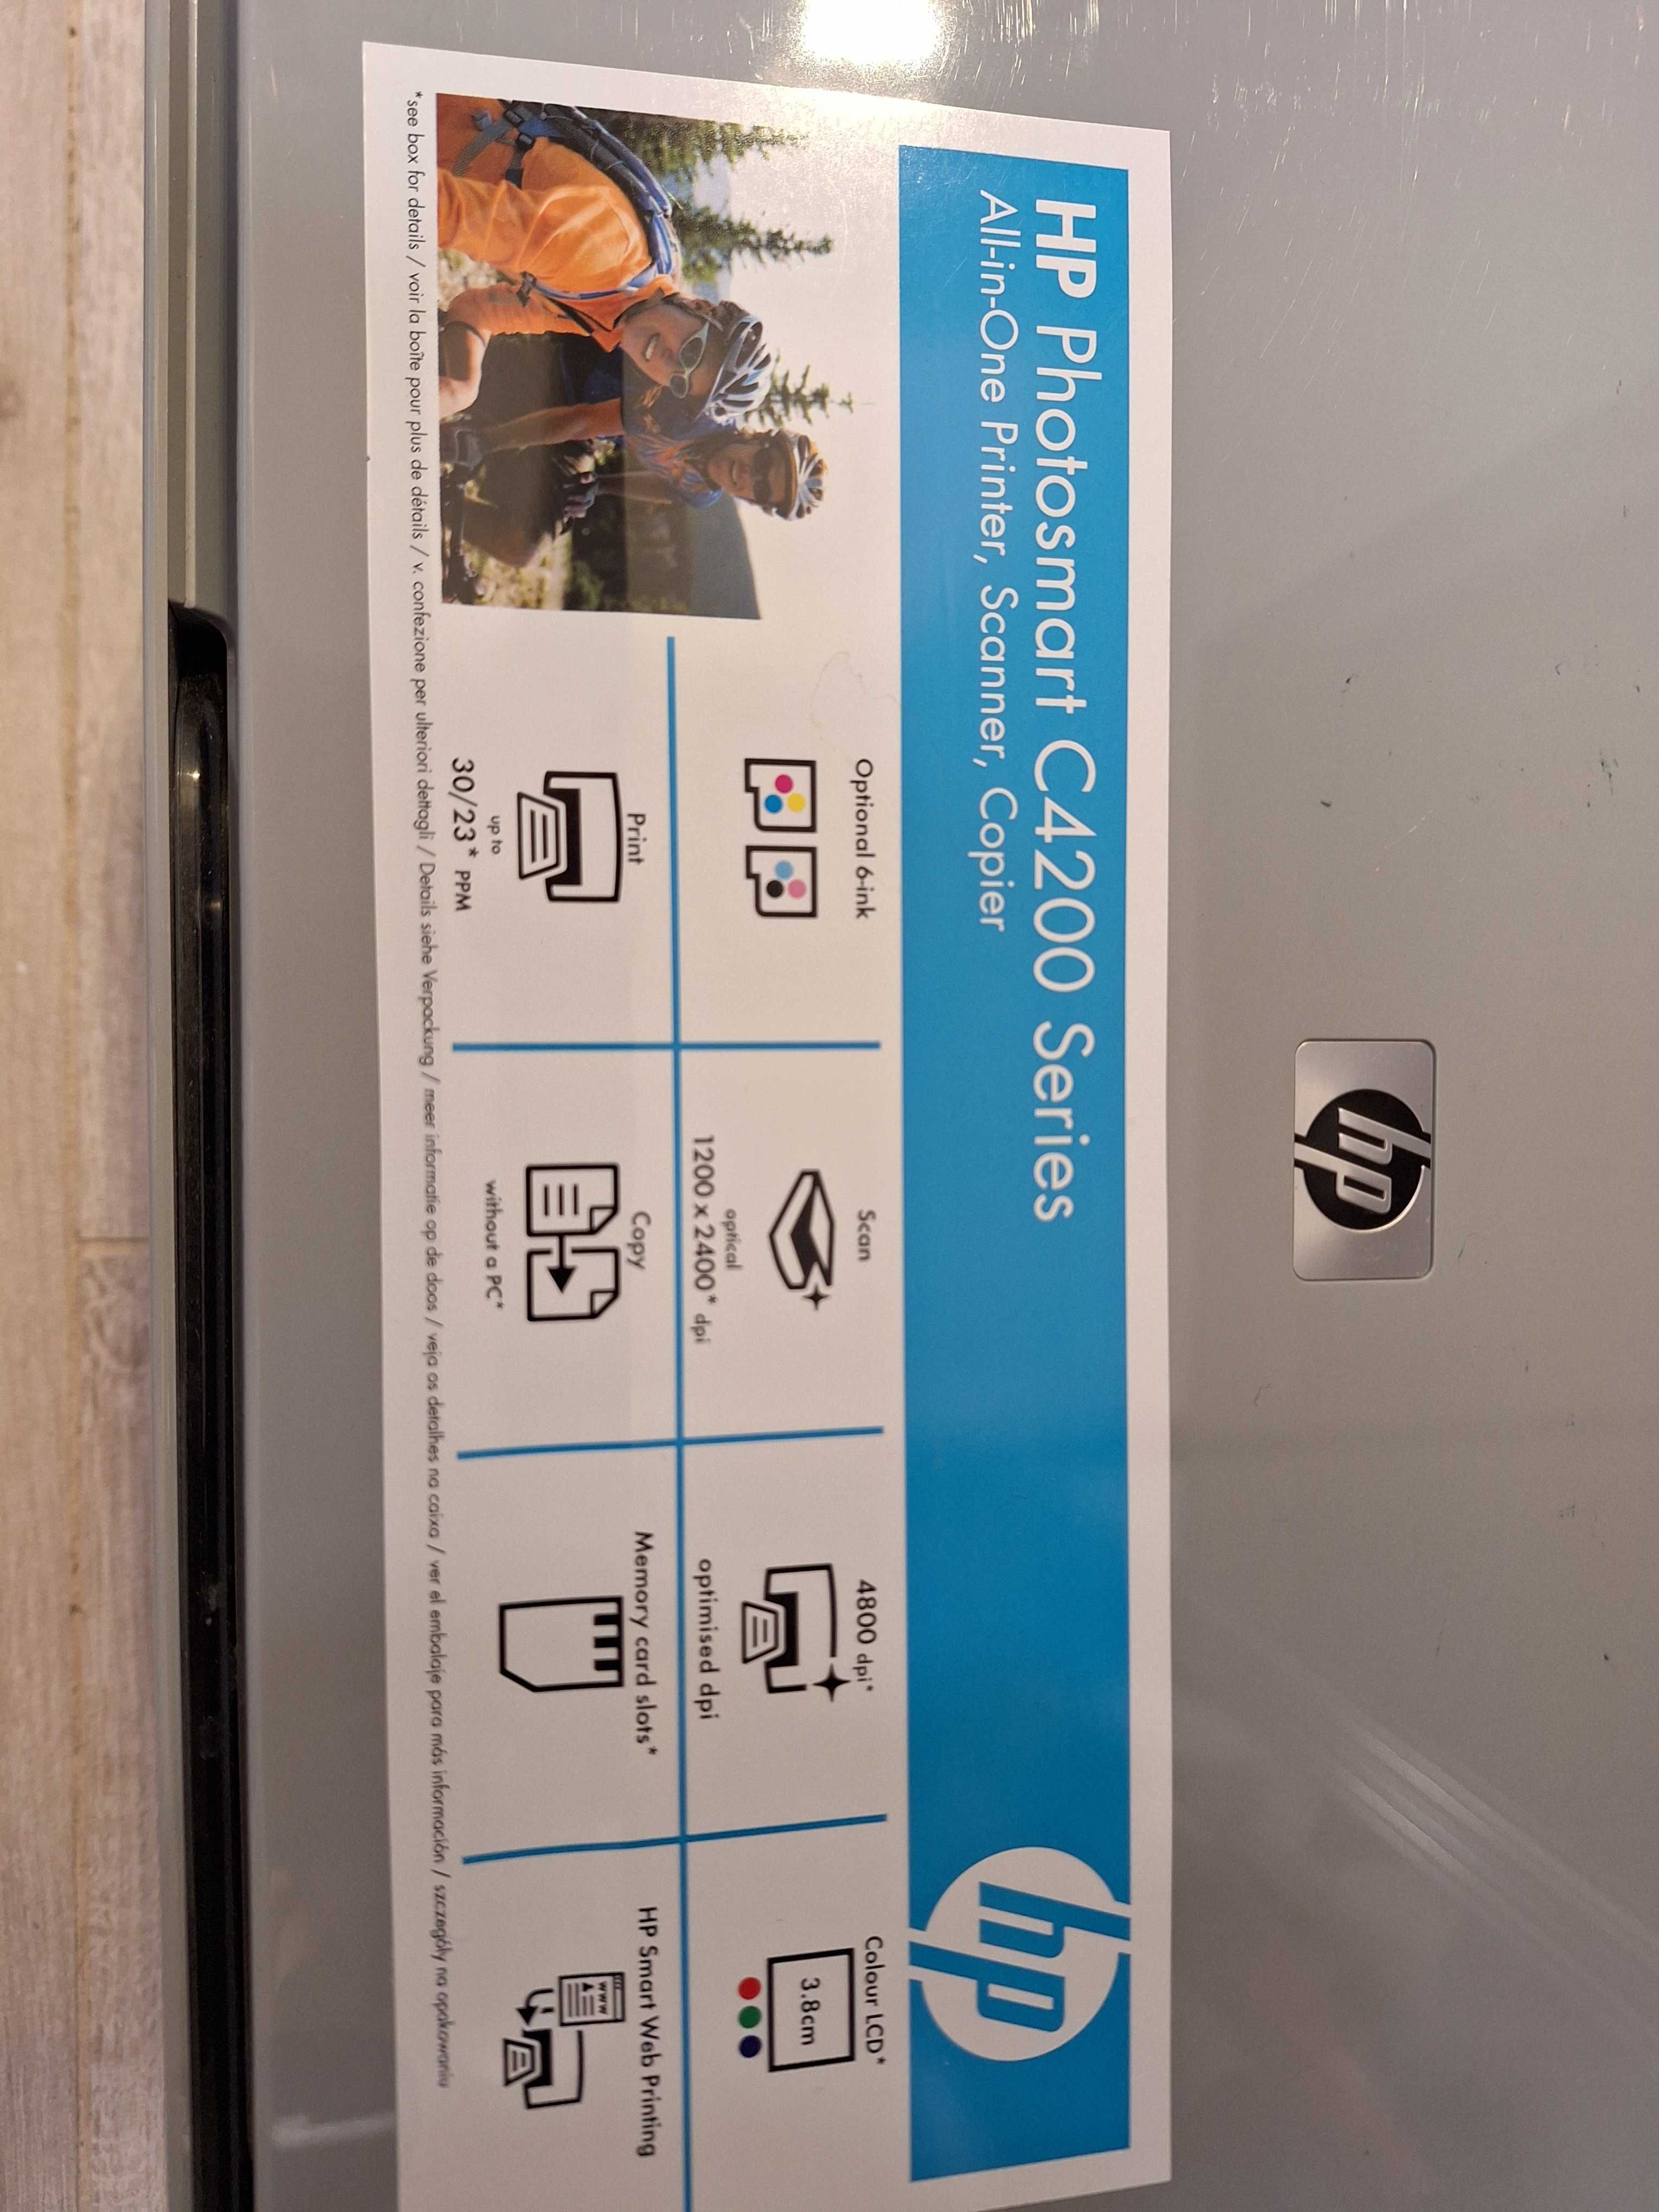 Vand imprimanta HP Photosmart C 4280 All in one!